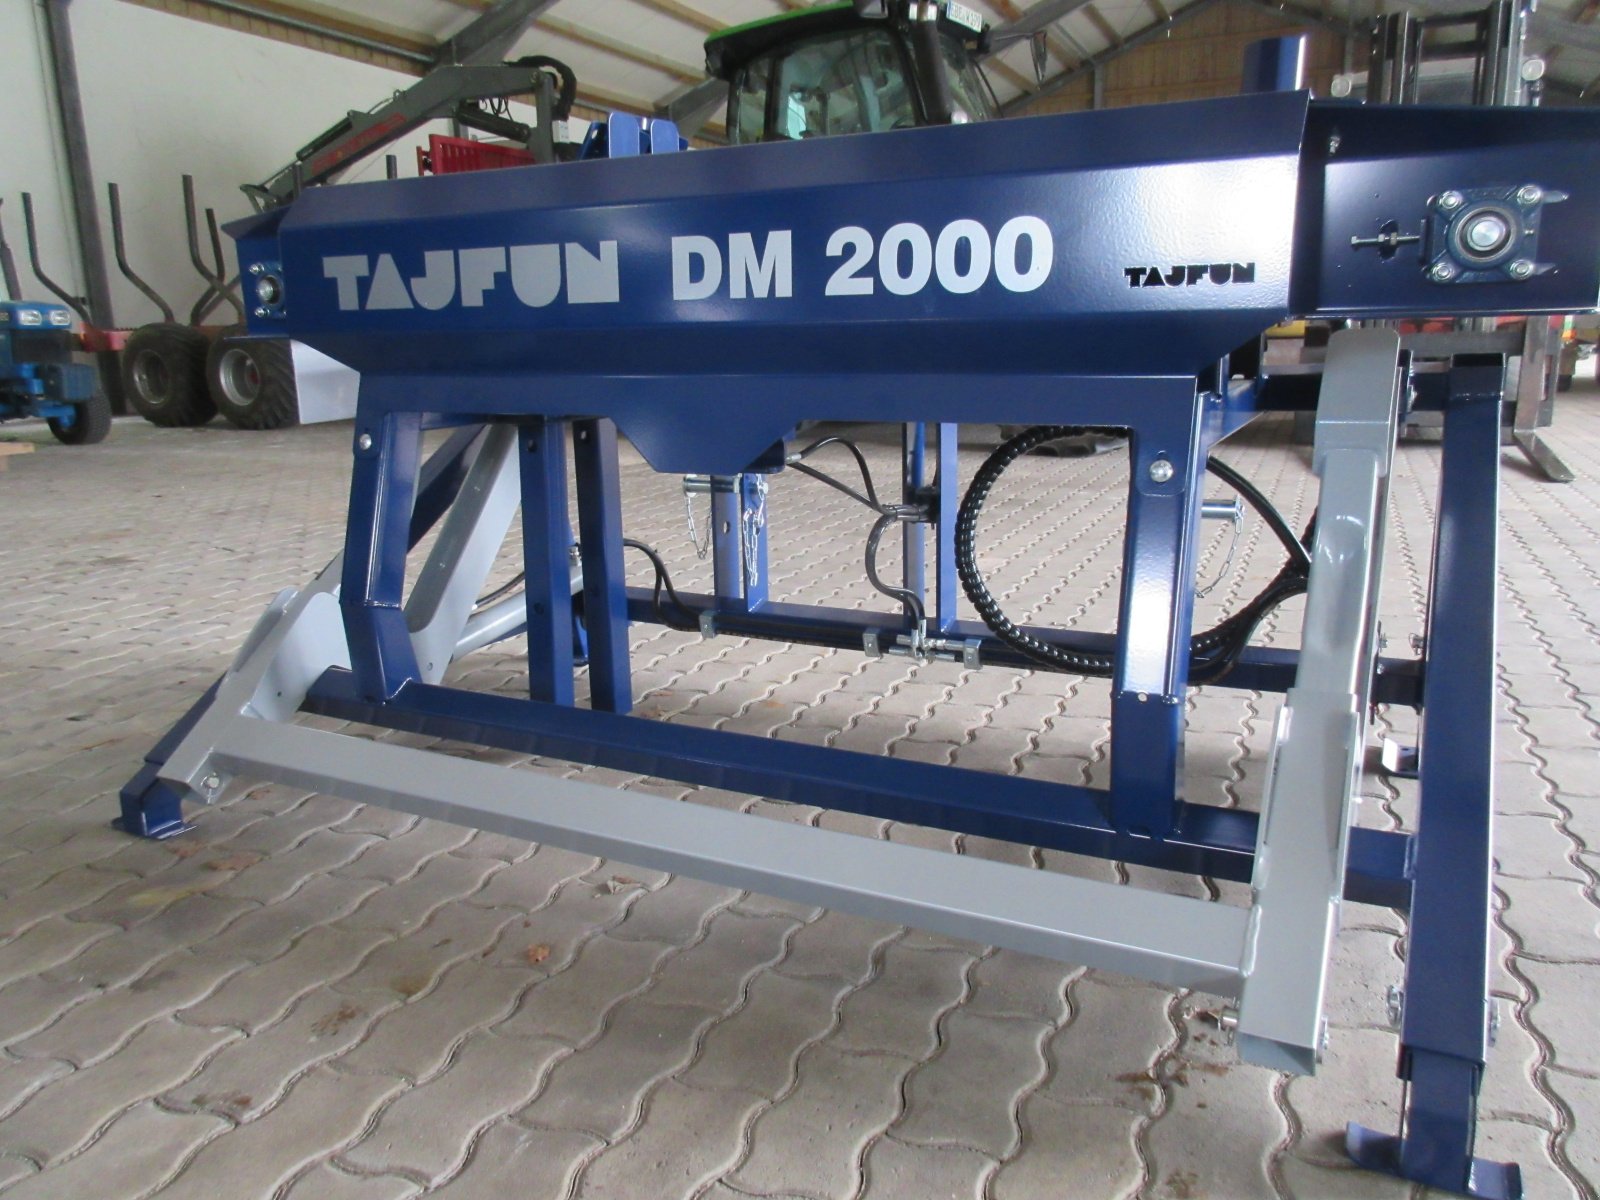 Sägeautomat & Spaltautomat типа Tajfun DM 2000, Neumaschine в Pliening (Фотография 1)